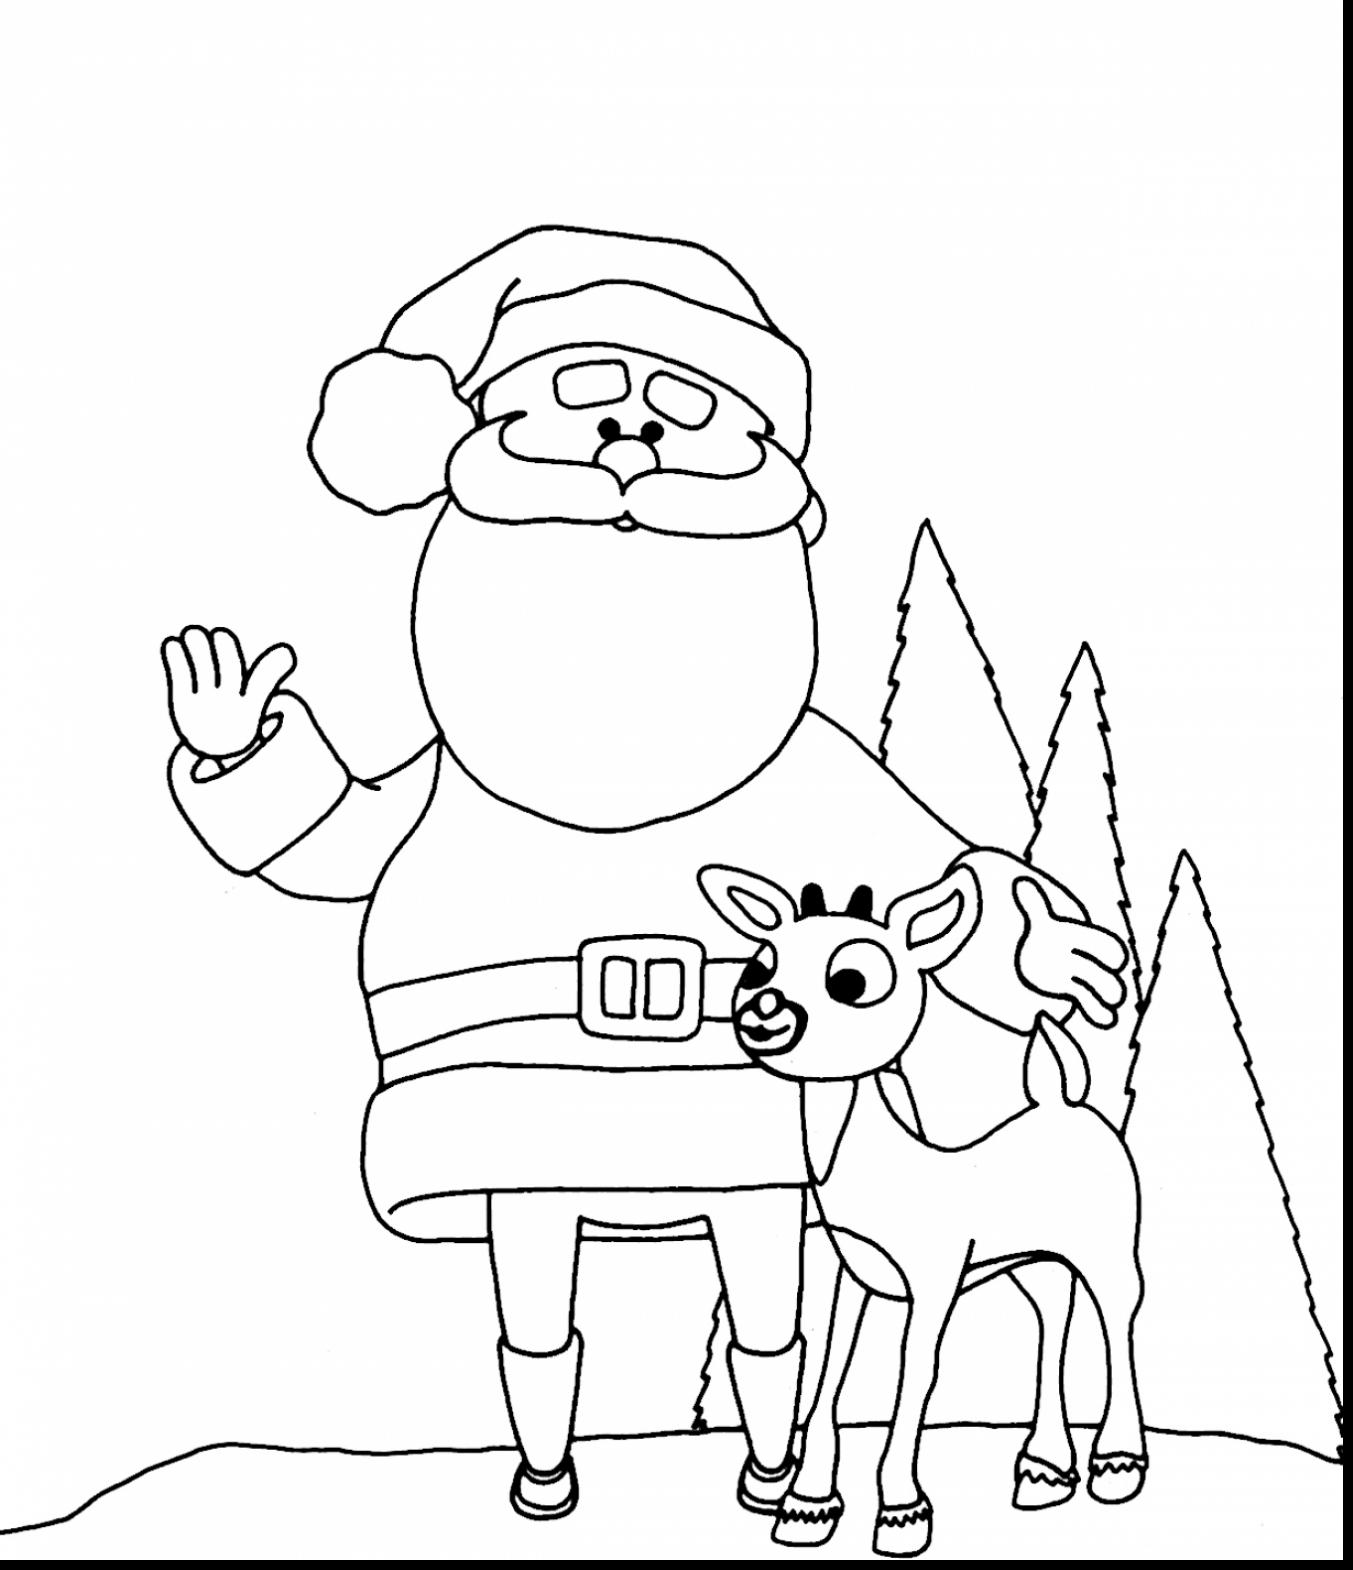 Reindeer Coloring Pages Free at GetColorings.com | Free printable